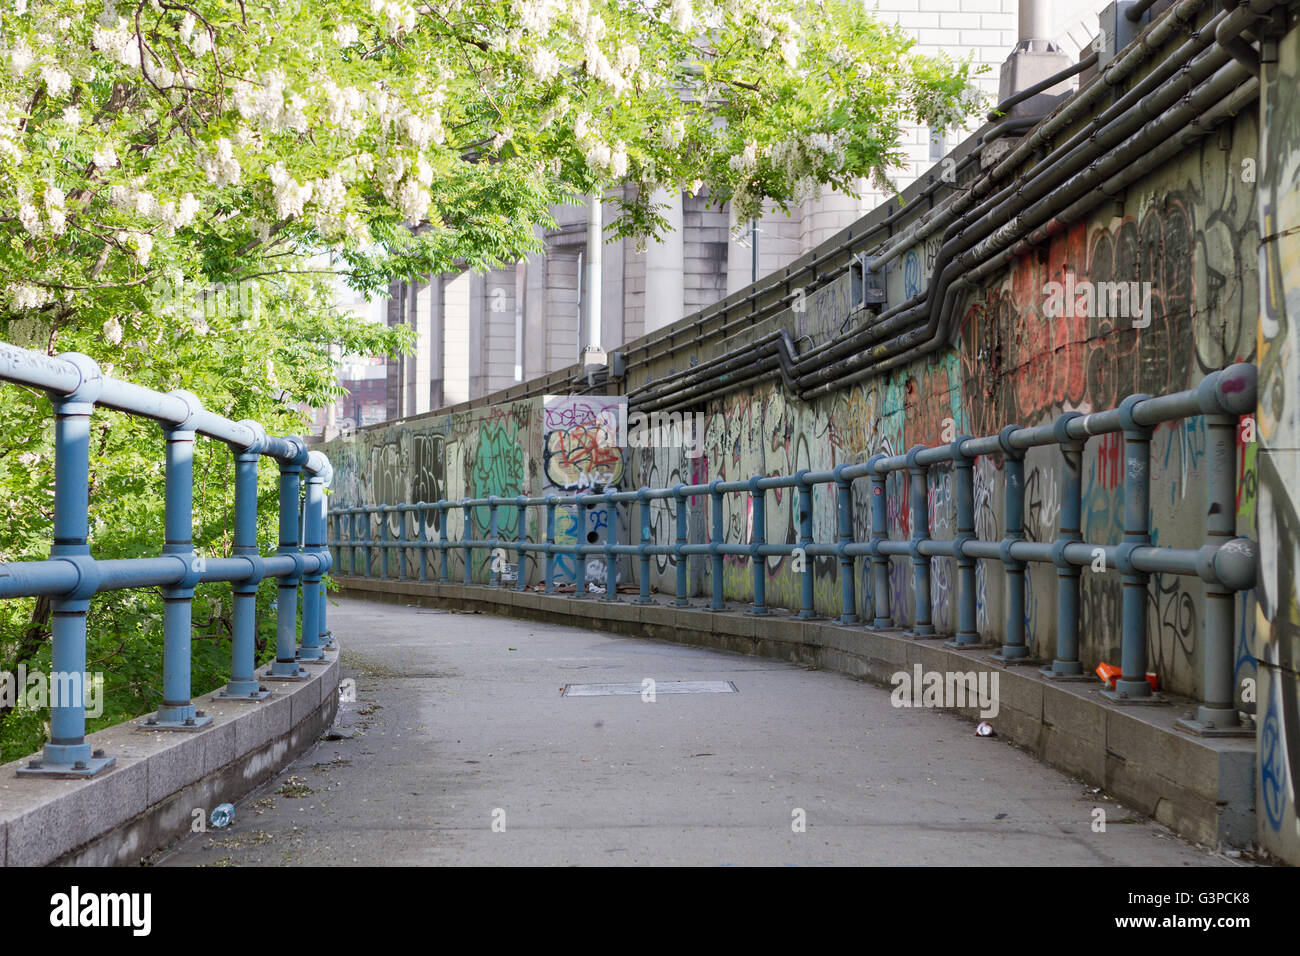 Urban, gritty sidewalk with graffiti in New York City Stock Photo